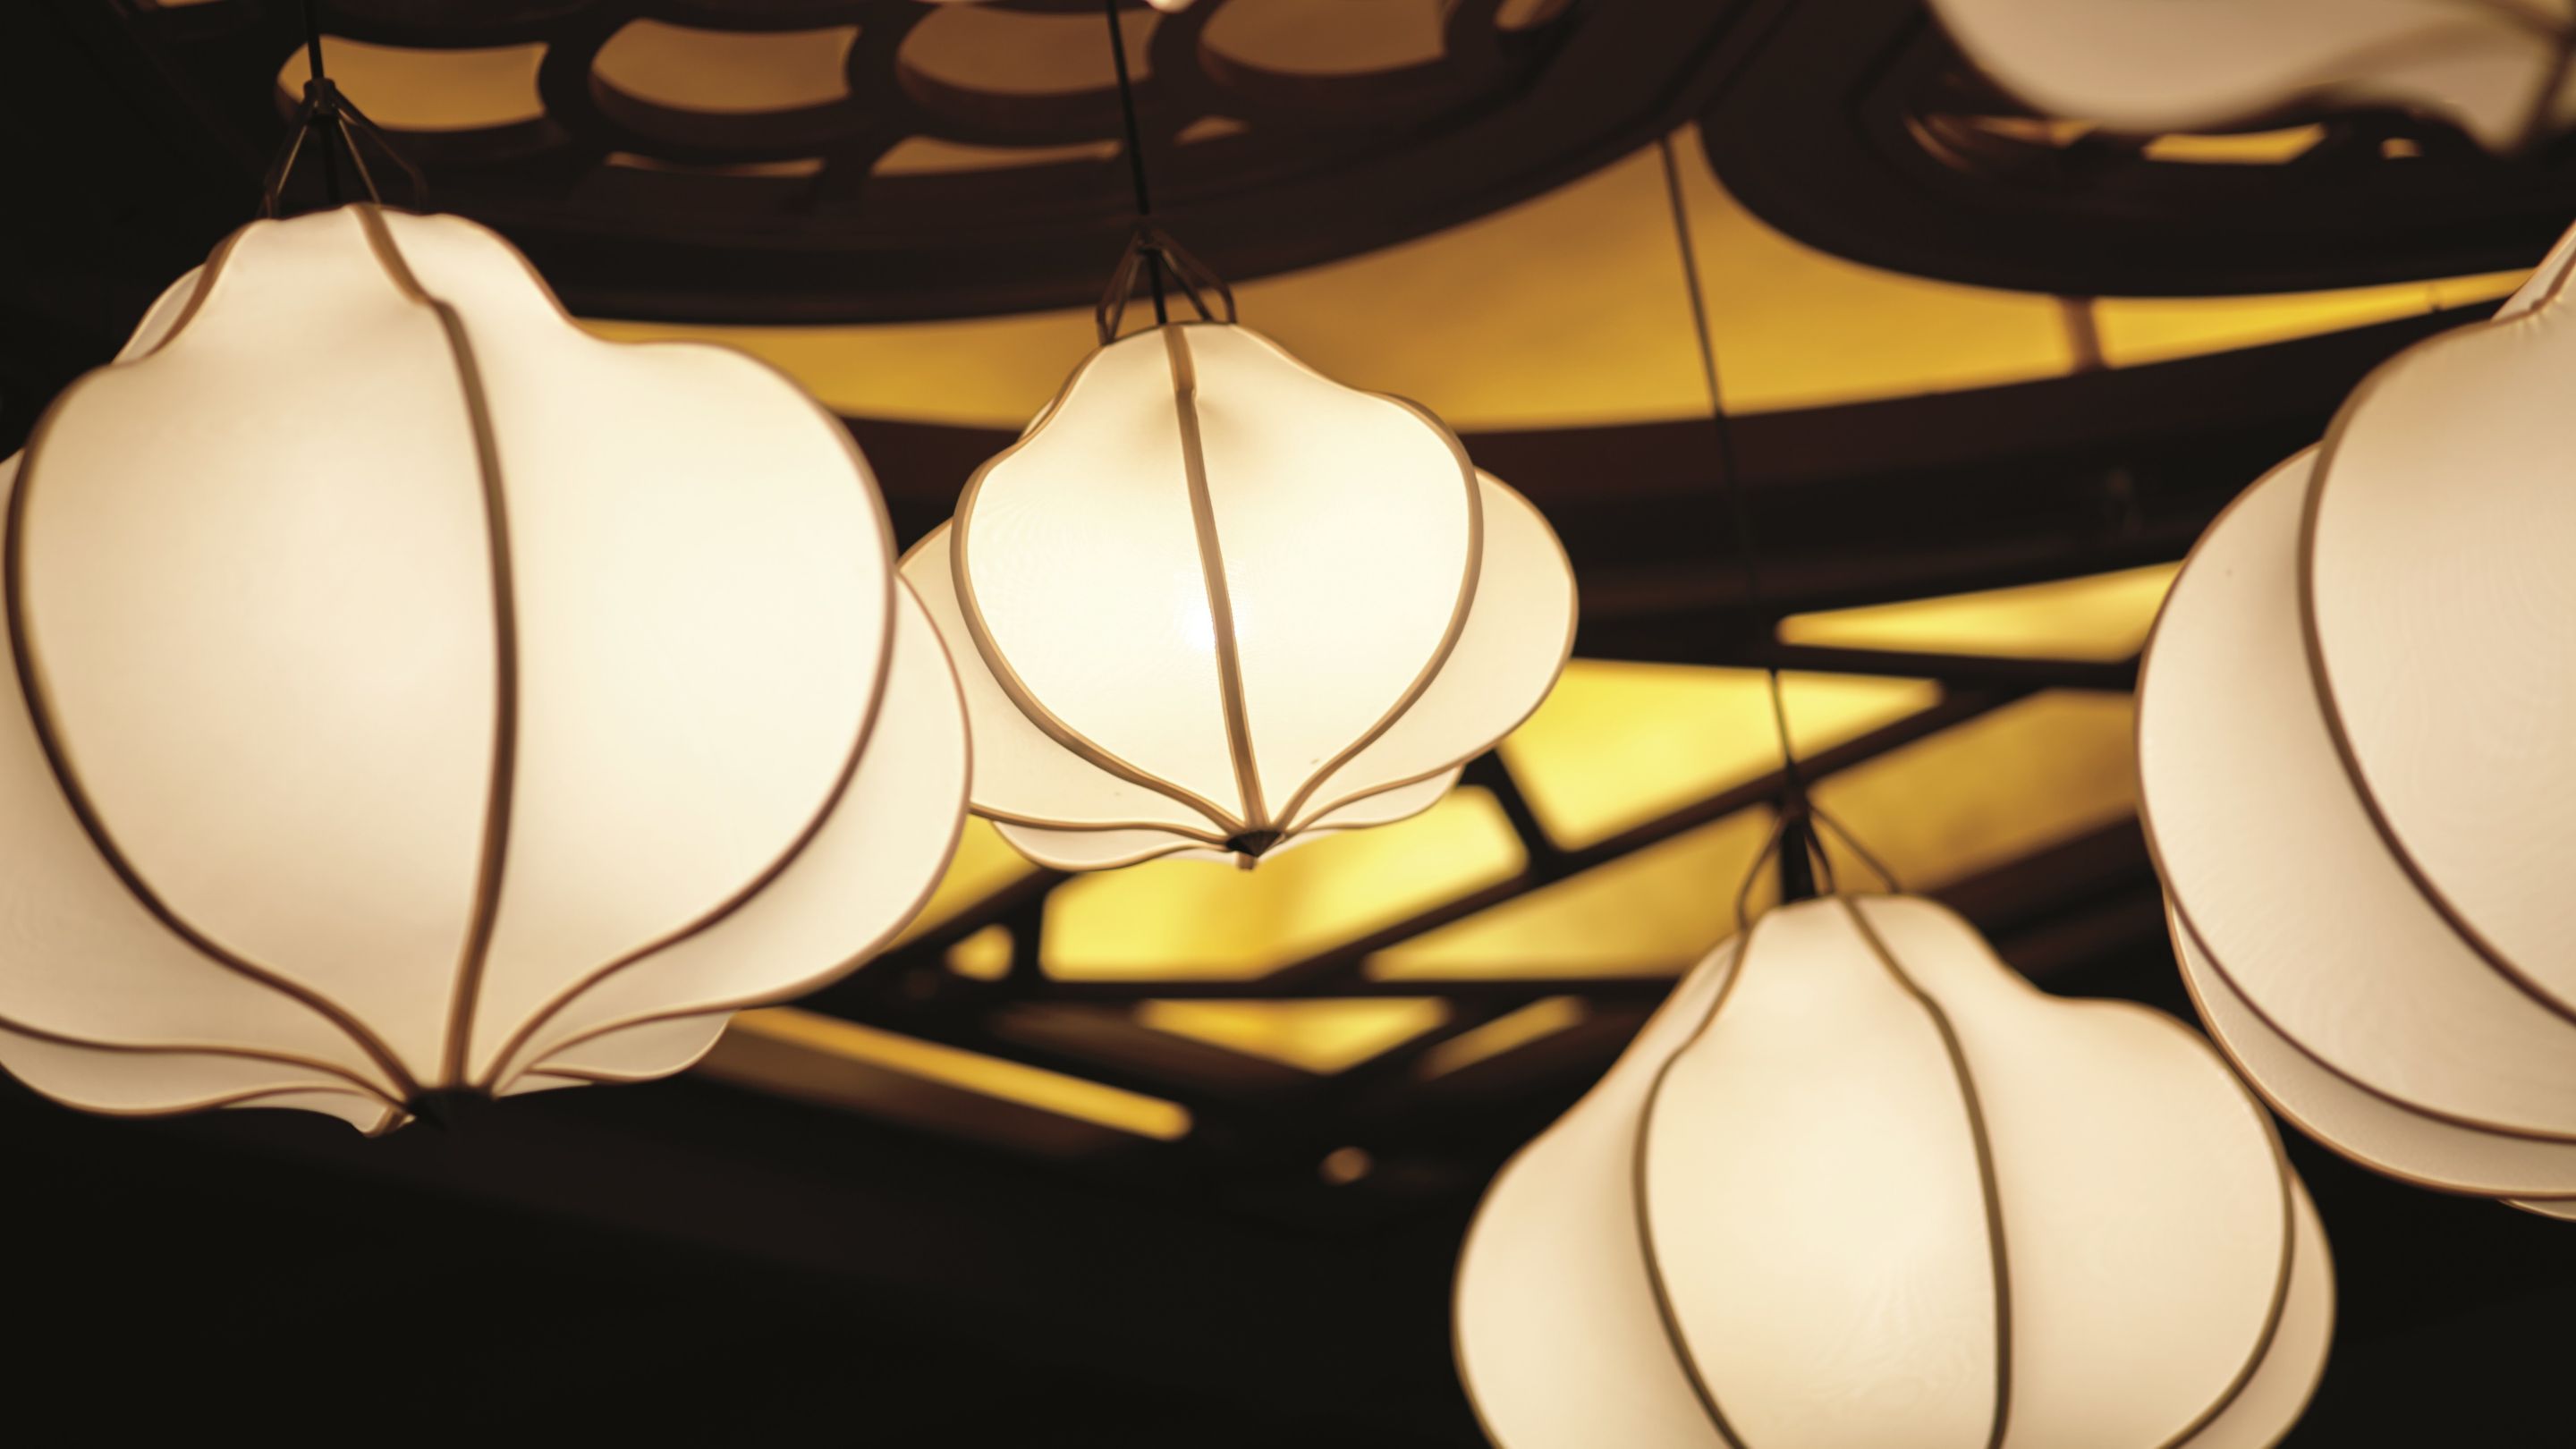 Li Xuan - artful detail multiple lamps